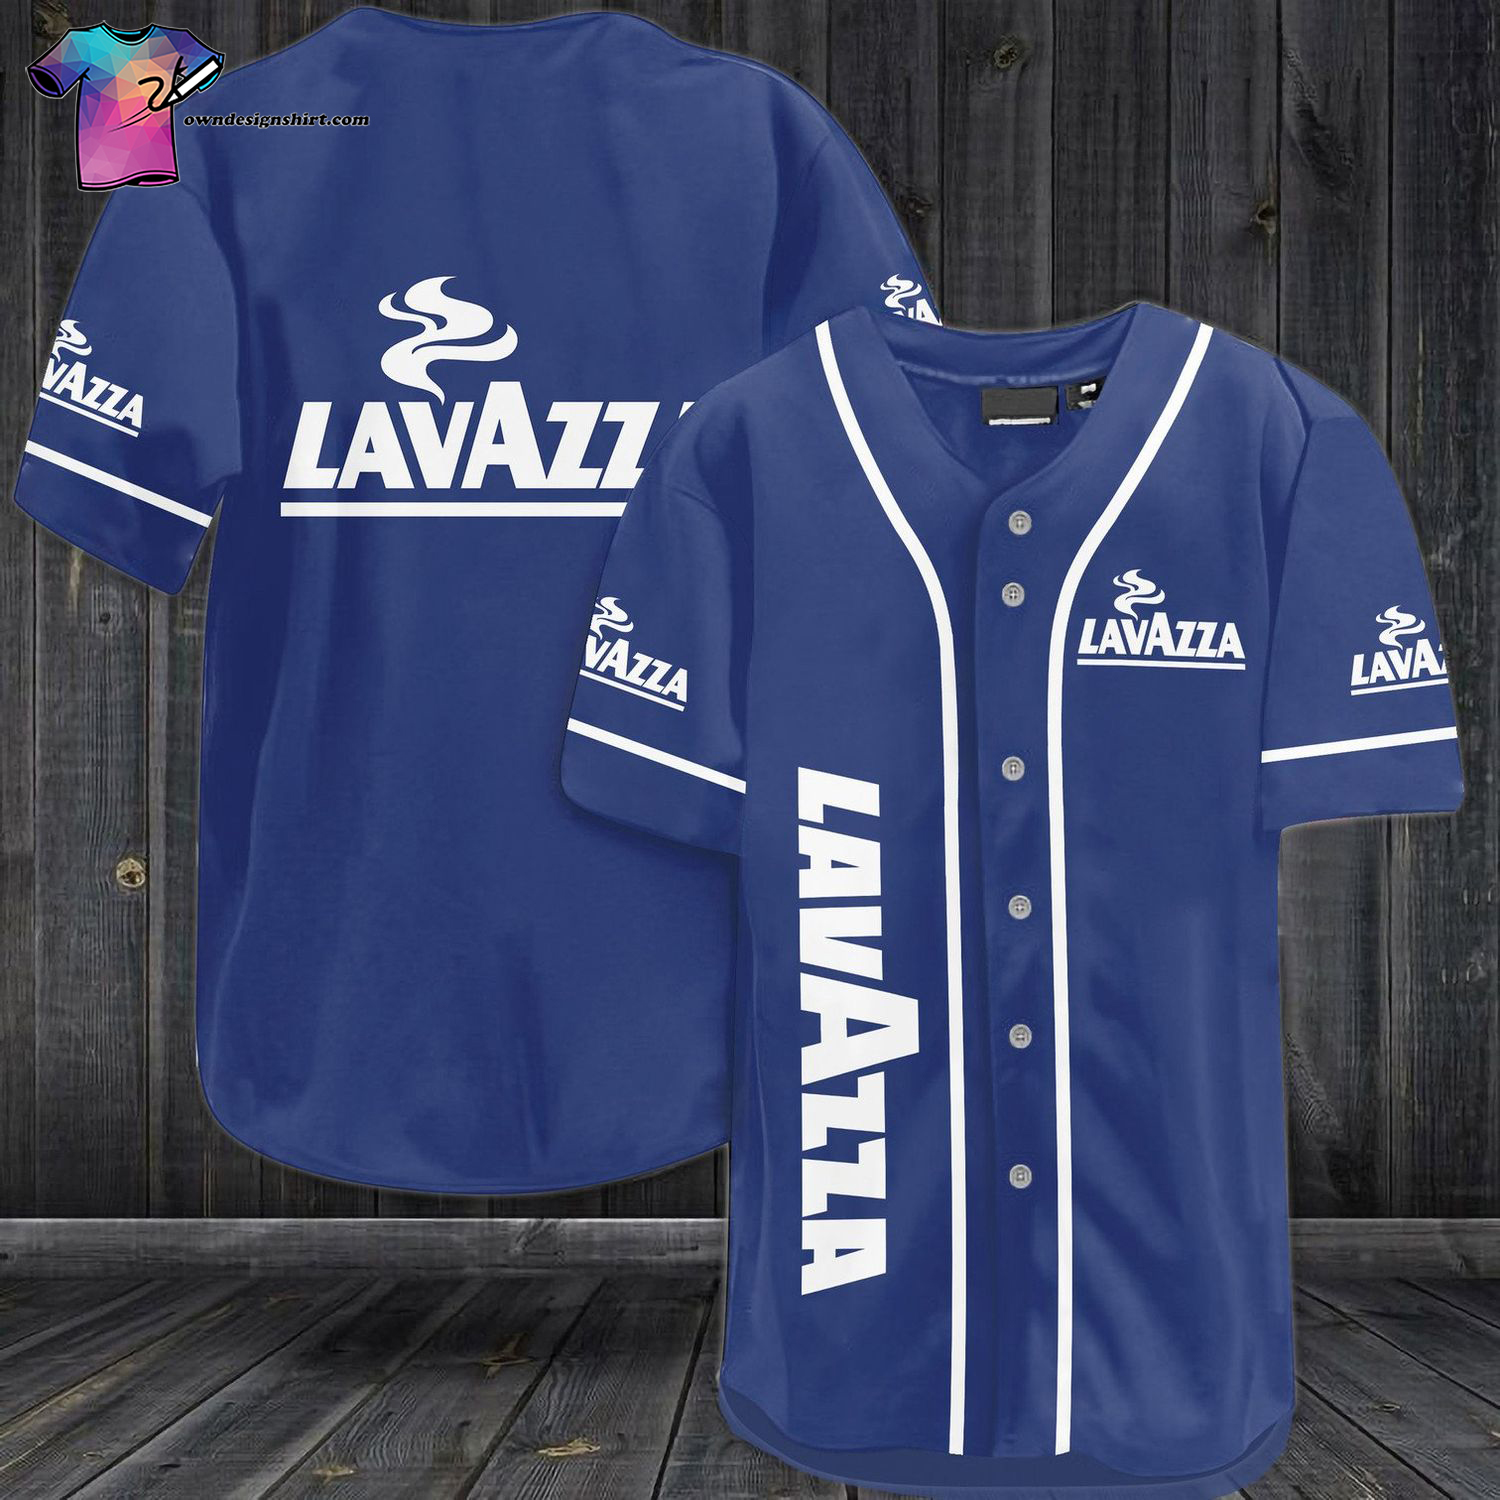 Lavazza Coffee All Over Print Baseball Jersey